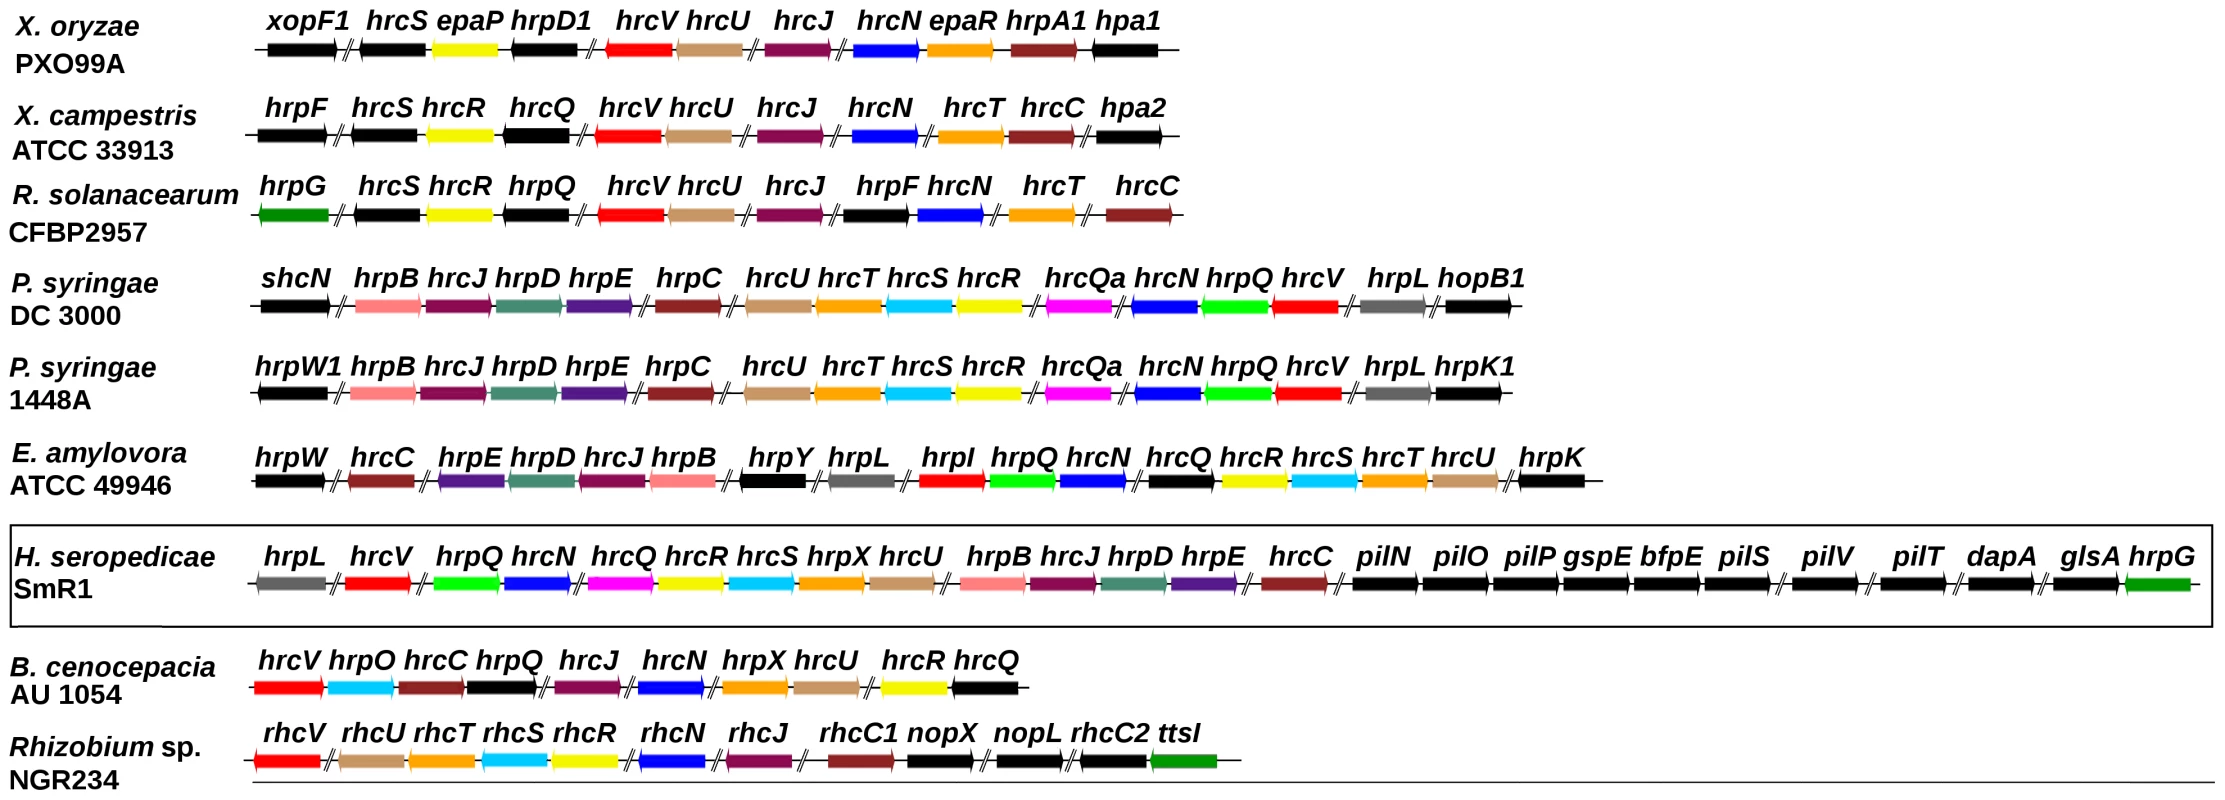 The type III secretion system gene cluster of <i>H. seropedicae</i> SmR1 and other organisms.